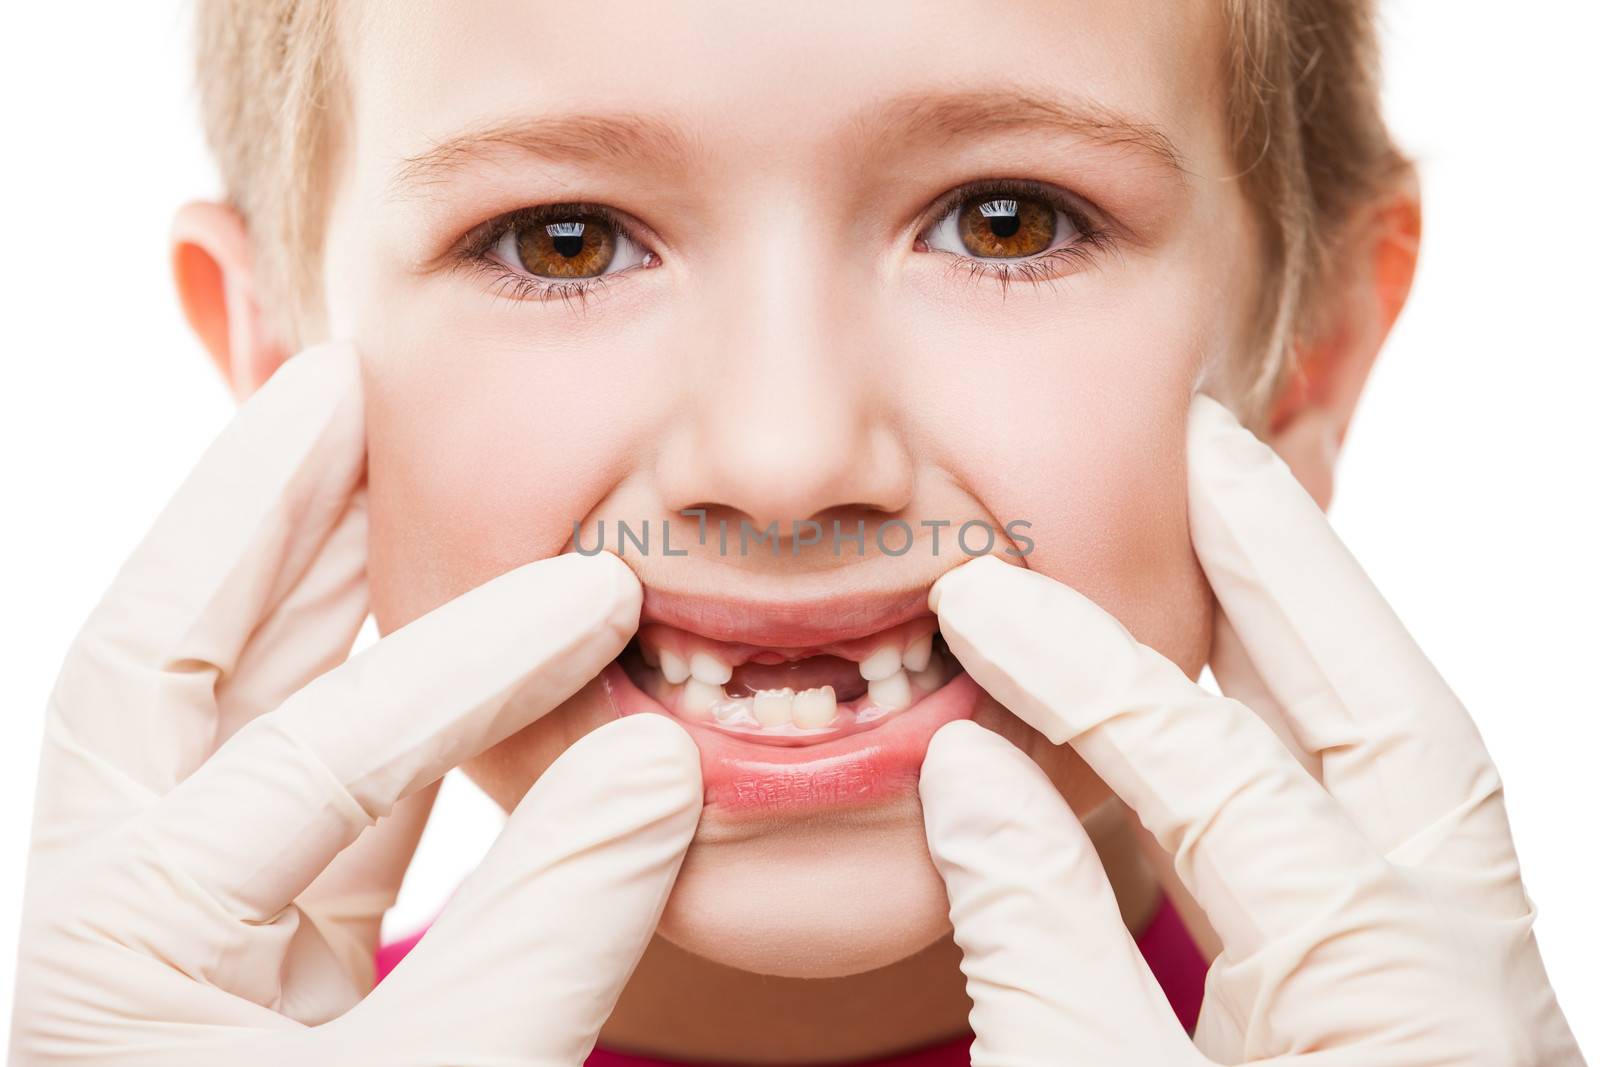 Dentist examining child teeth by ia_64